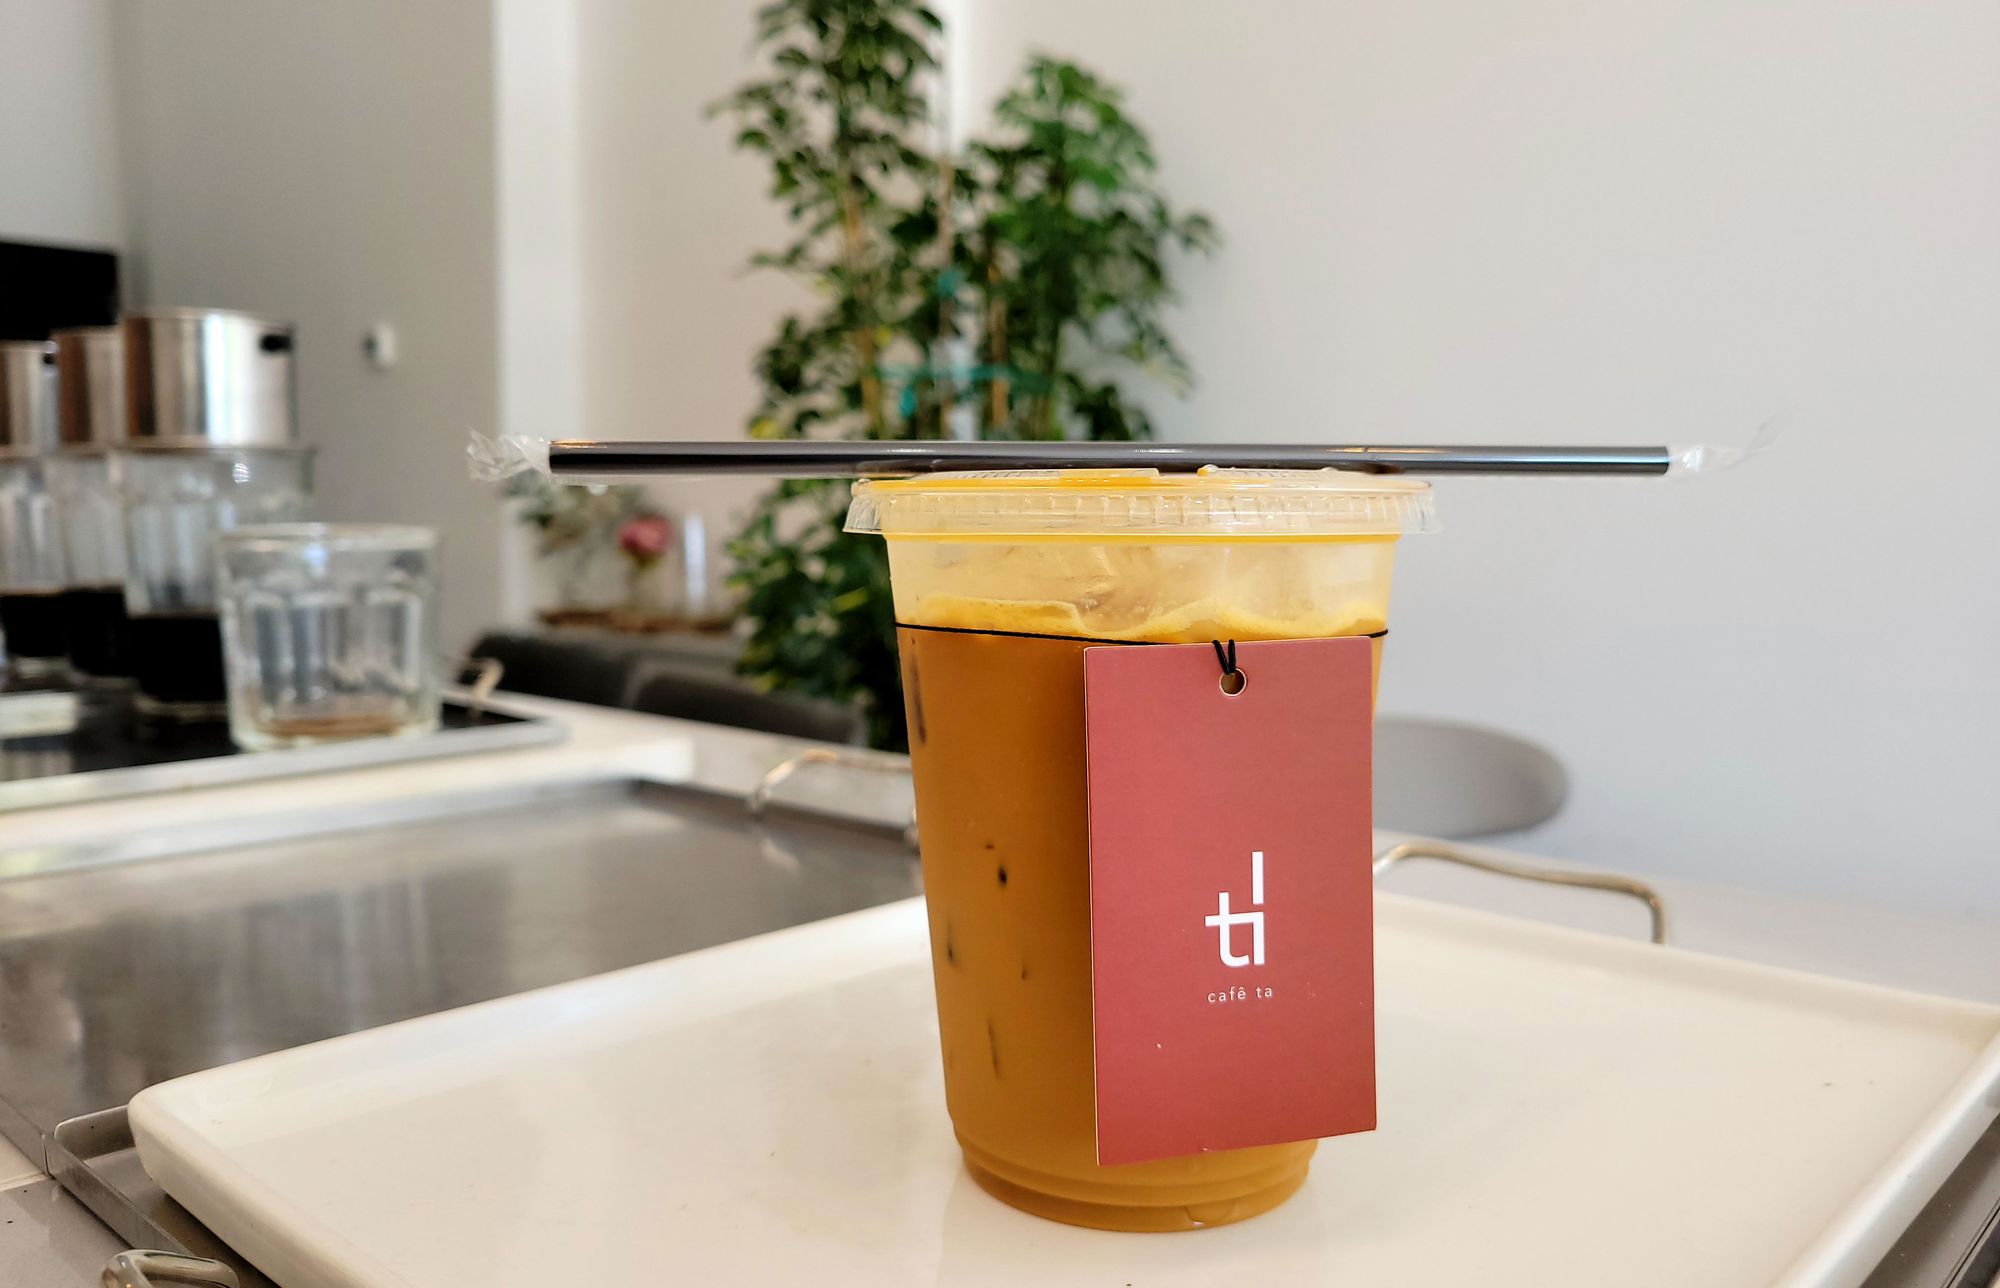 Denver’s 1st Vietnamese Coffee Shop - Tí: Cafê Ta